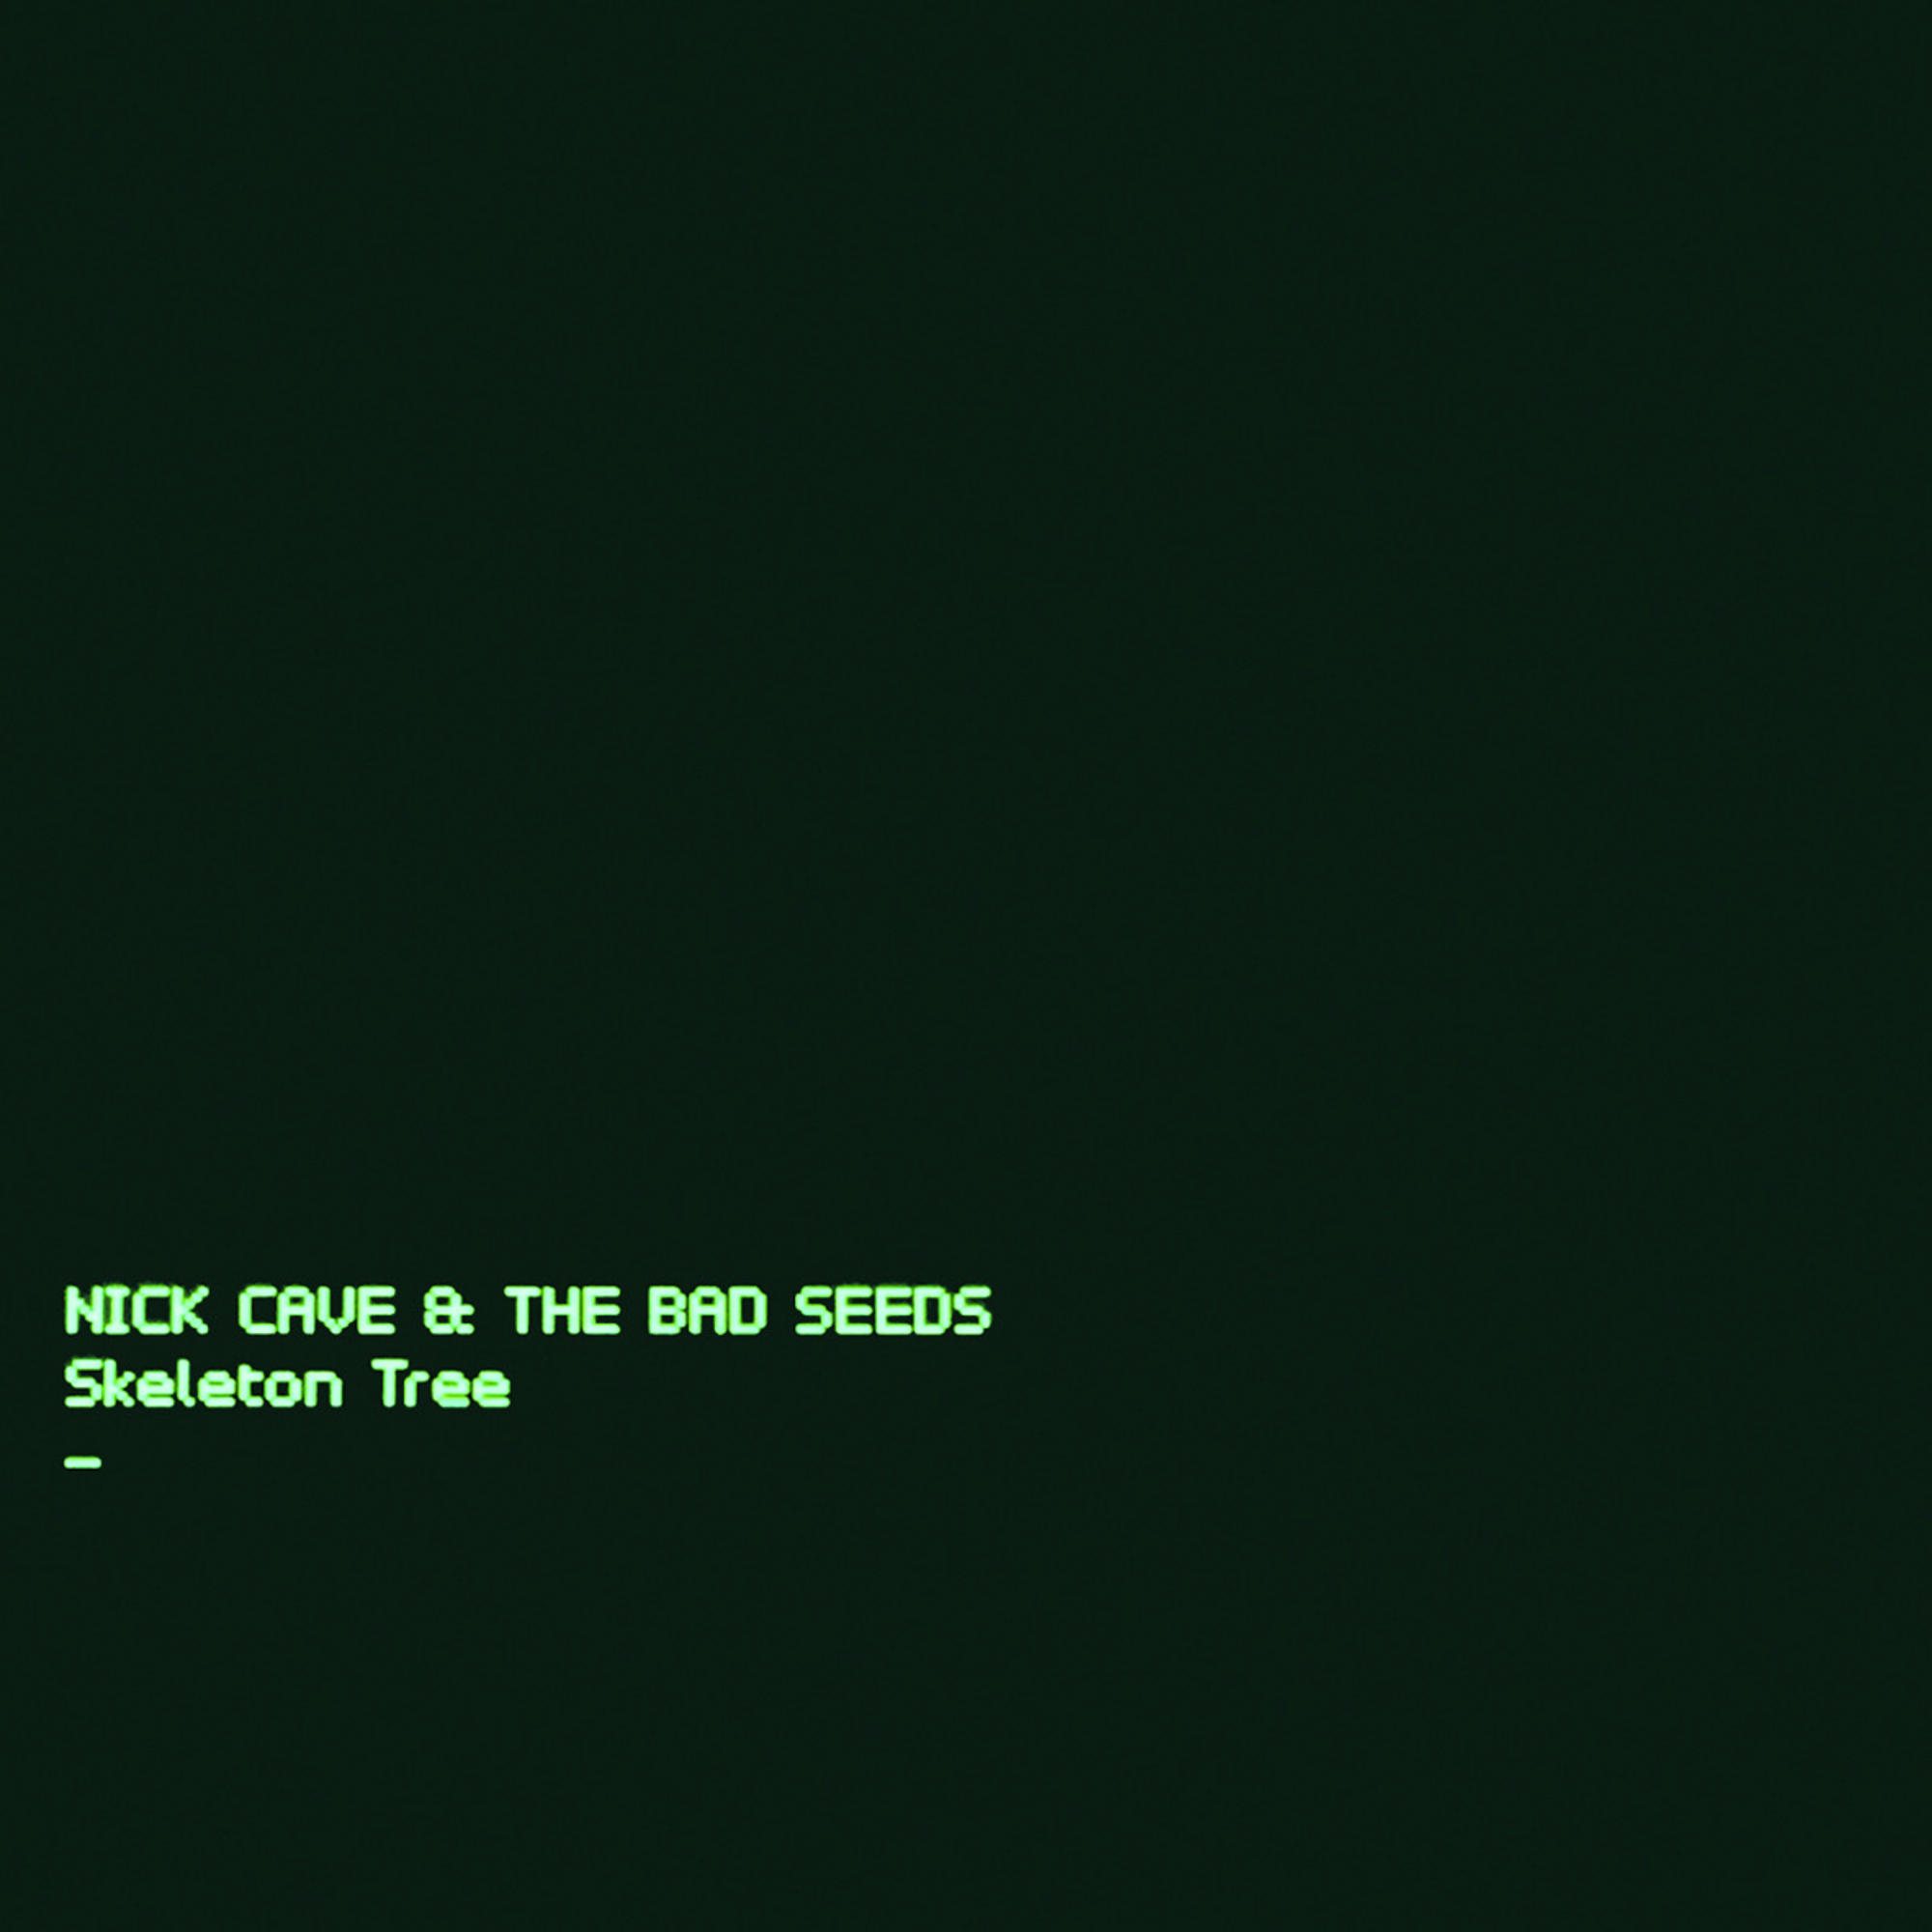 Seeds Tree The - Cave, (CD) Bad - Skeleton Nick